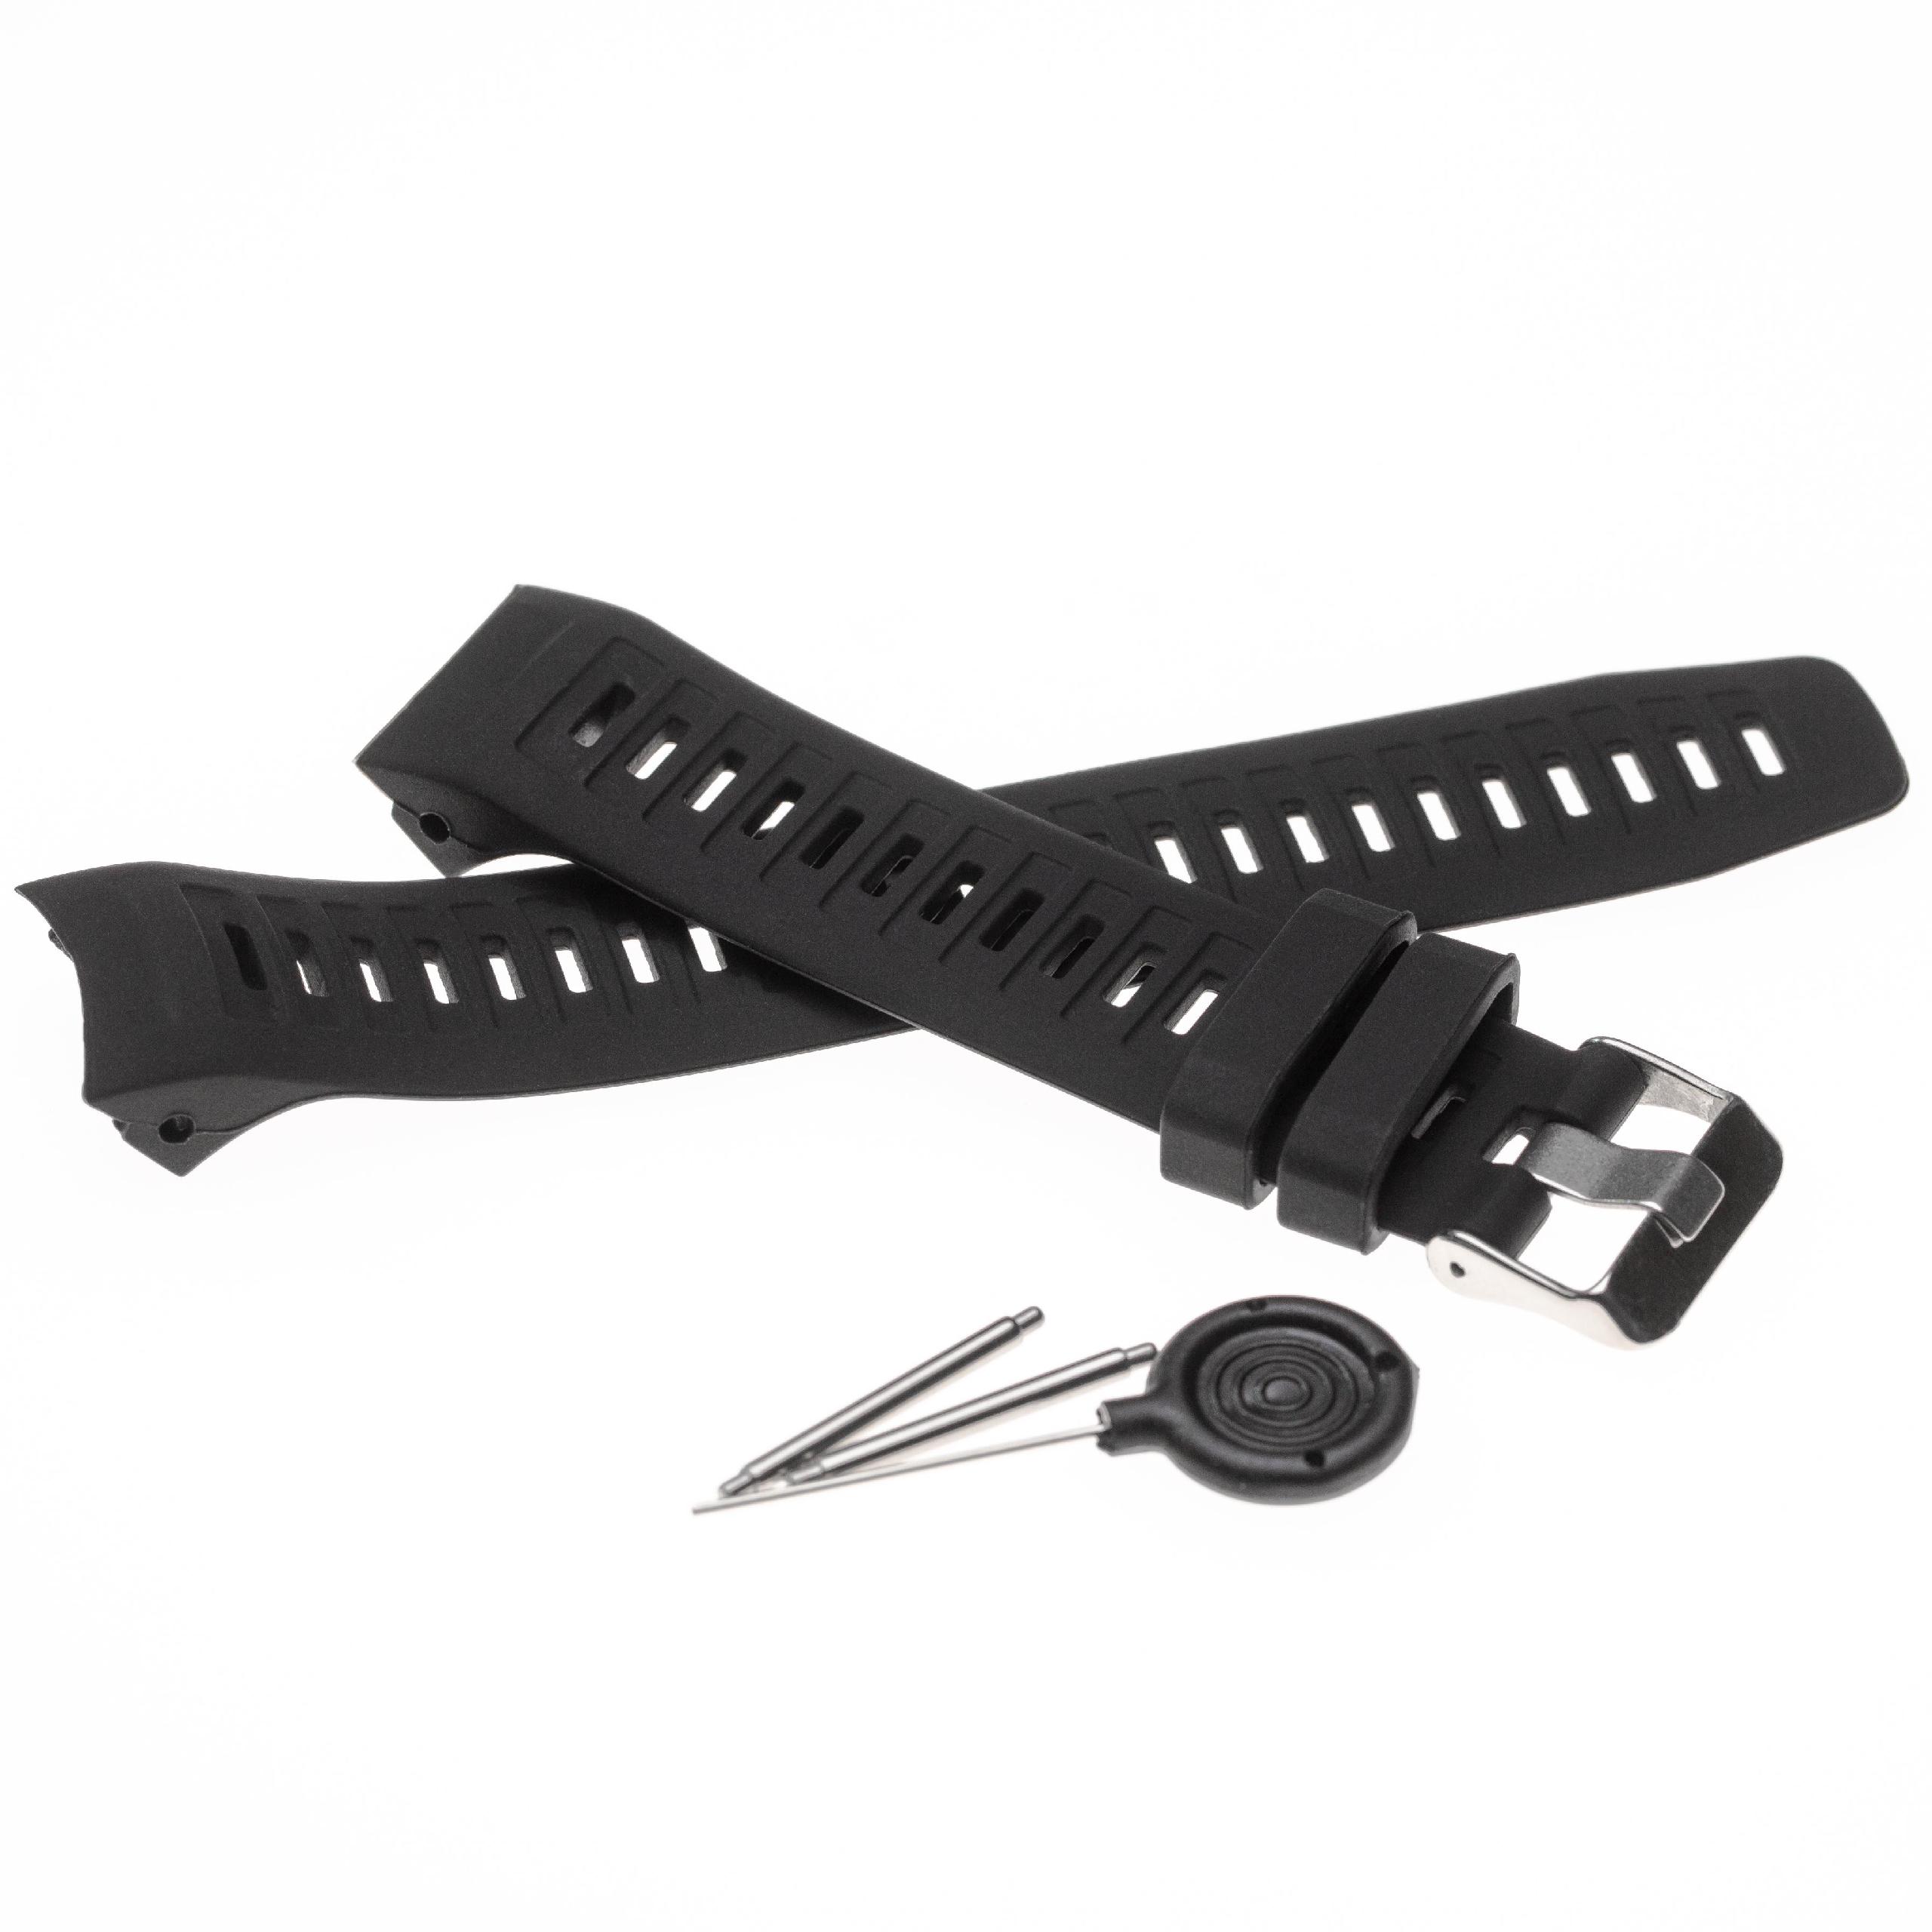 wristband for Garmin Smartwatch - 12.7 + 9.7 cm long, silicone, black